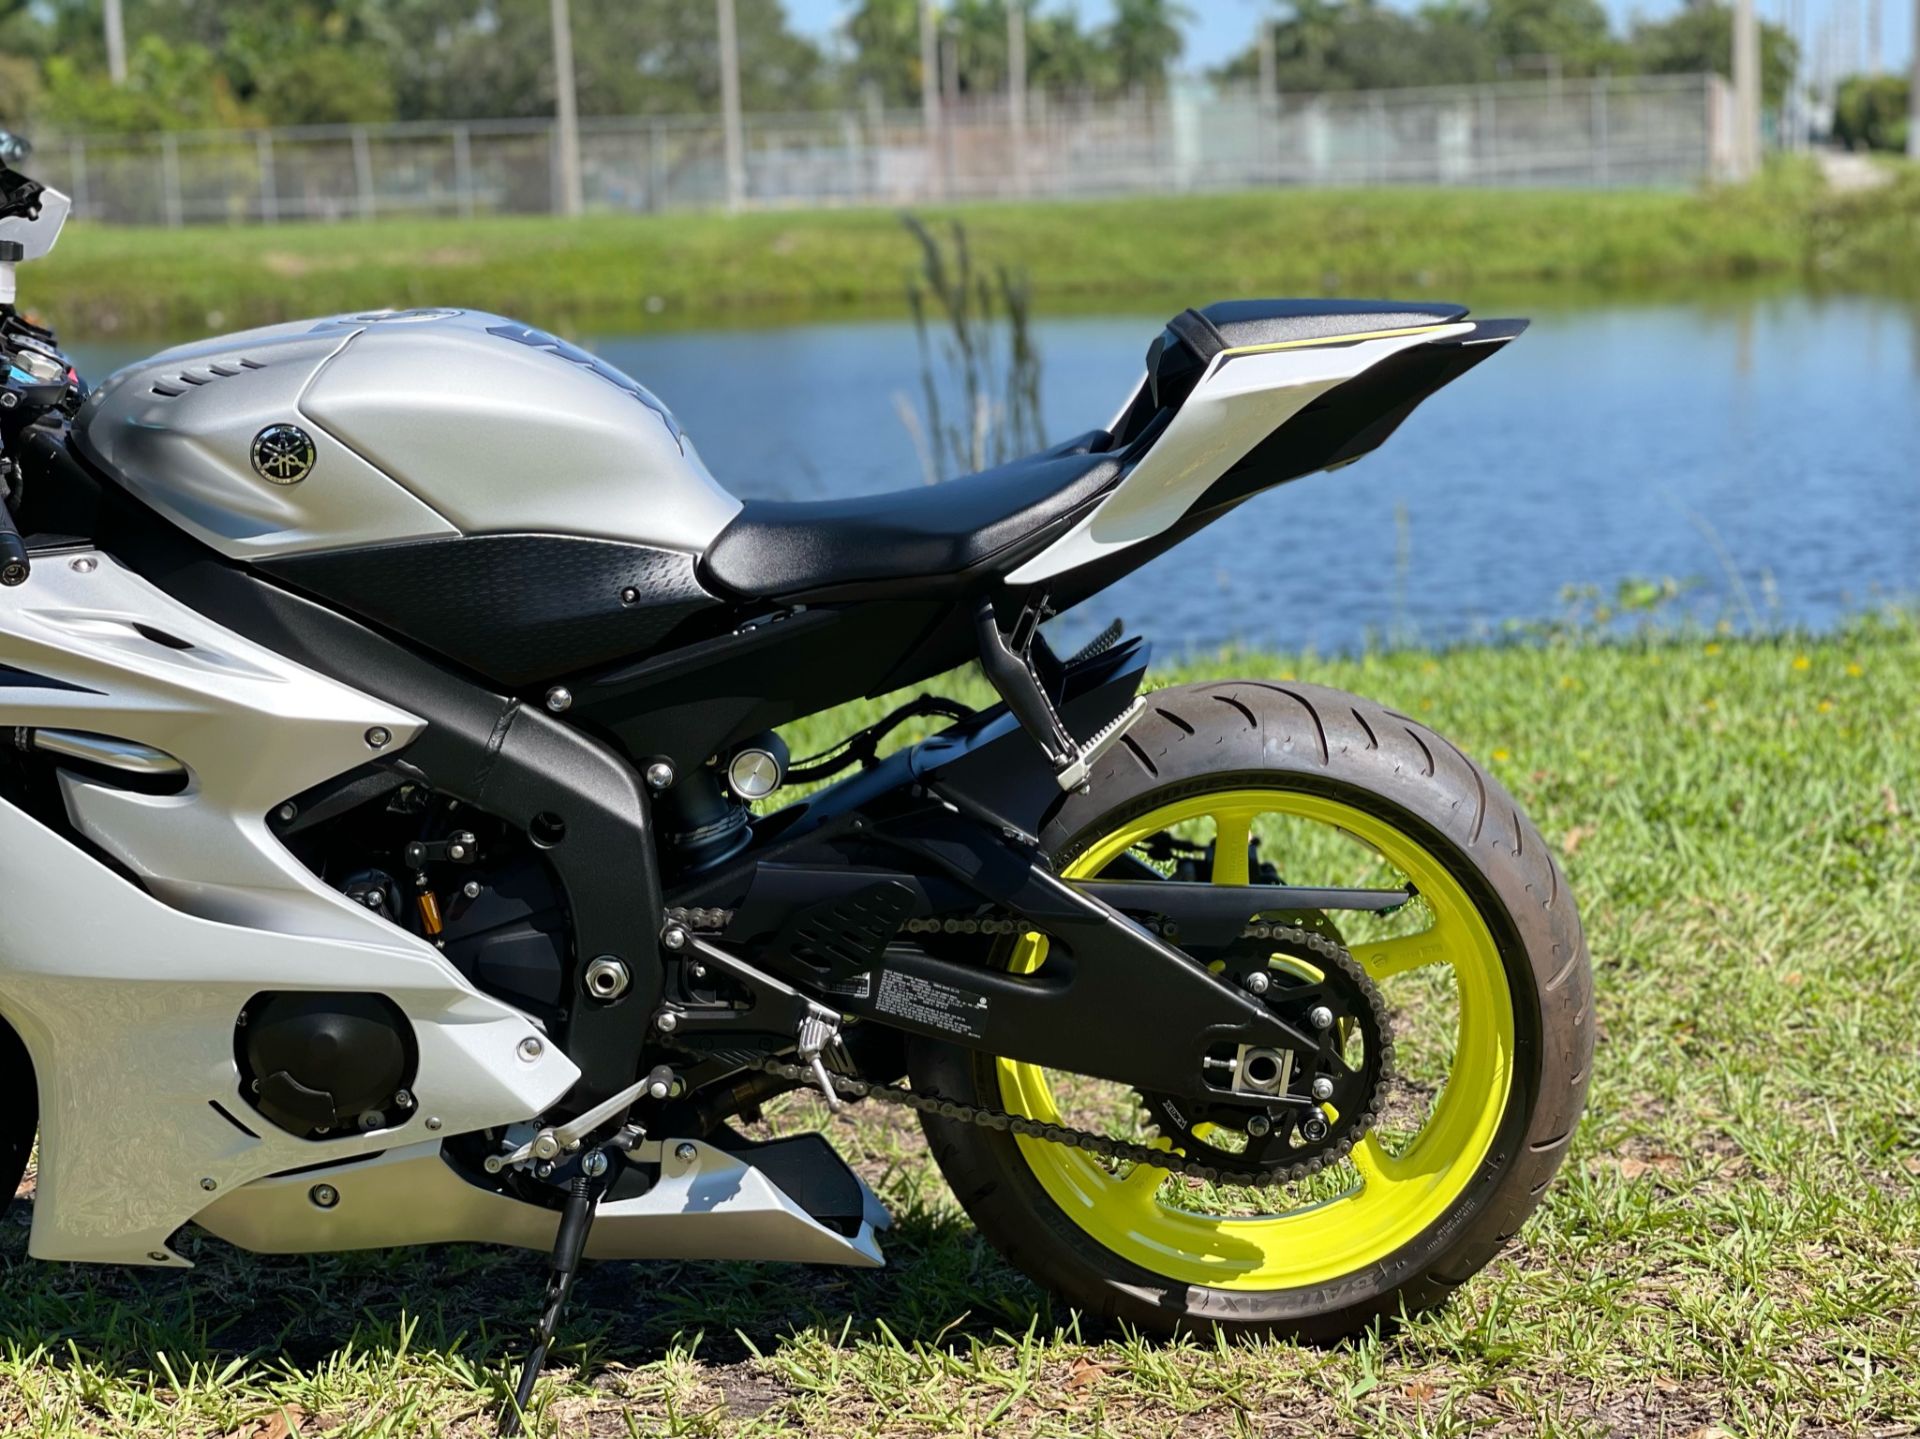 2017 Yamaha YZF-R6 in North Miami Beach, Florida - Photo 21